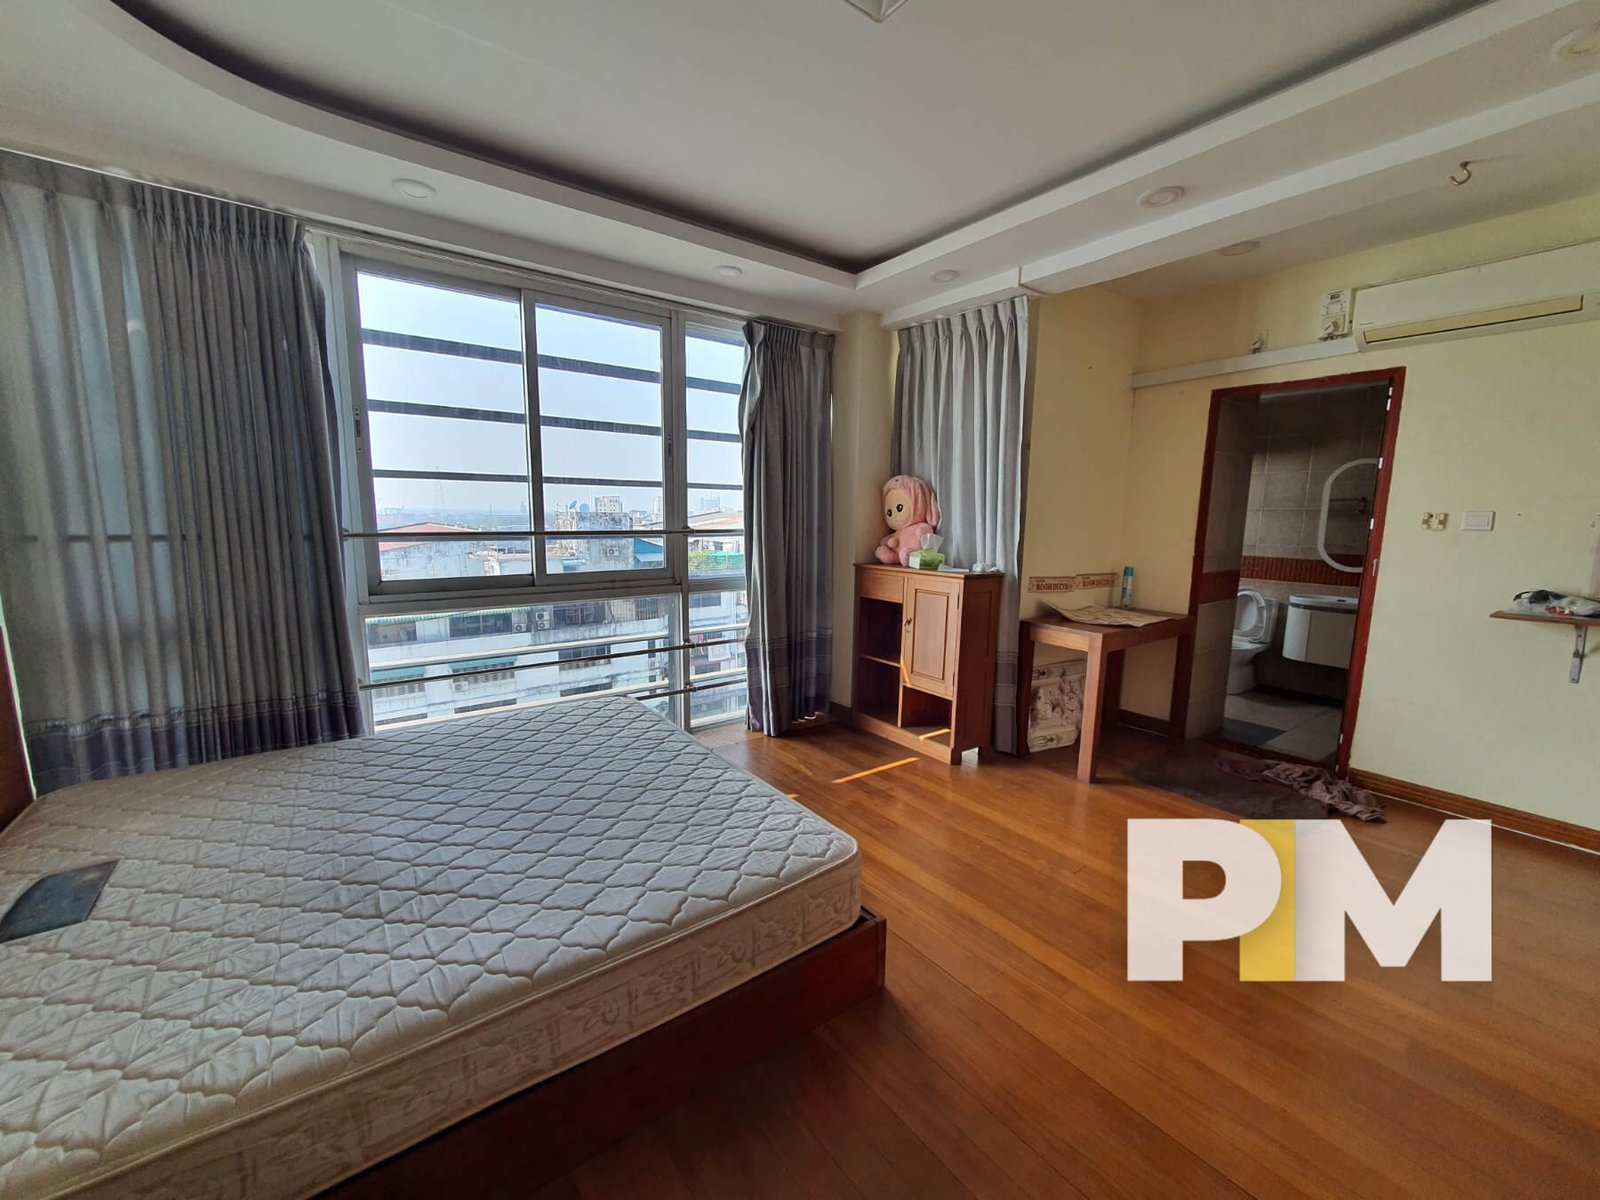 Room with window - Yangon Real Estate